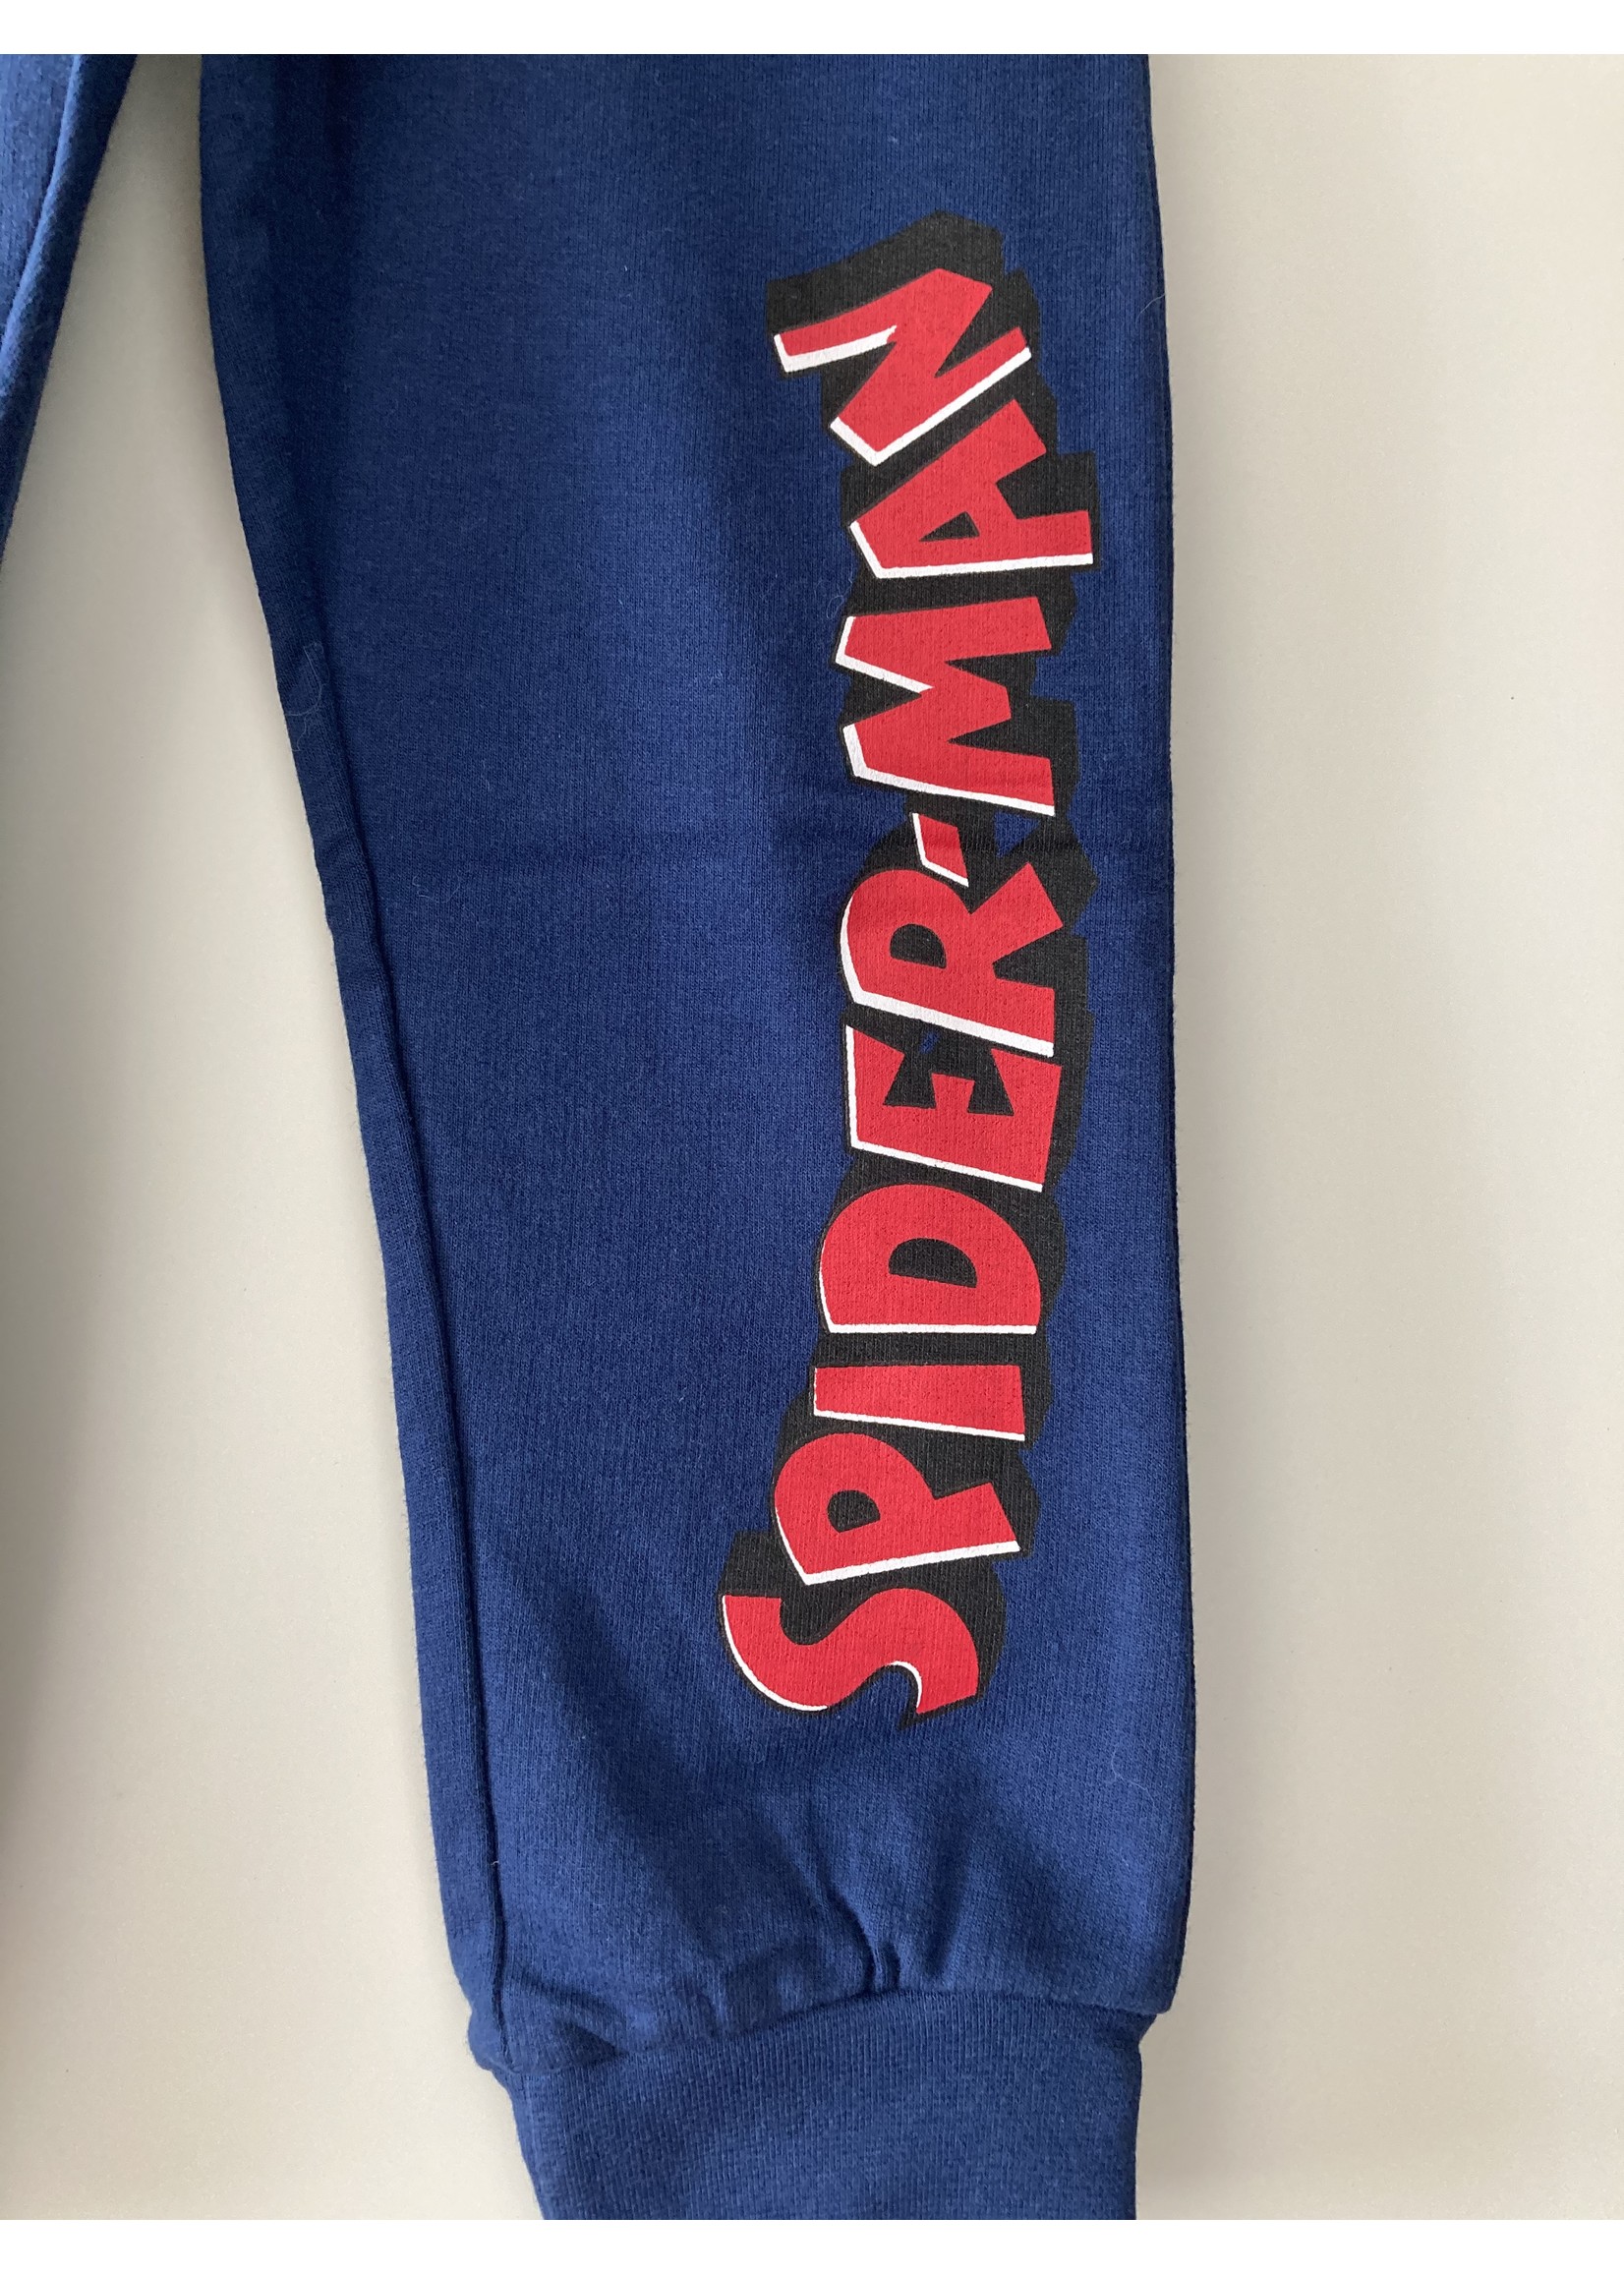 Marvel Spodnie dresowe Spiderman z Marvel Navy Blue